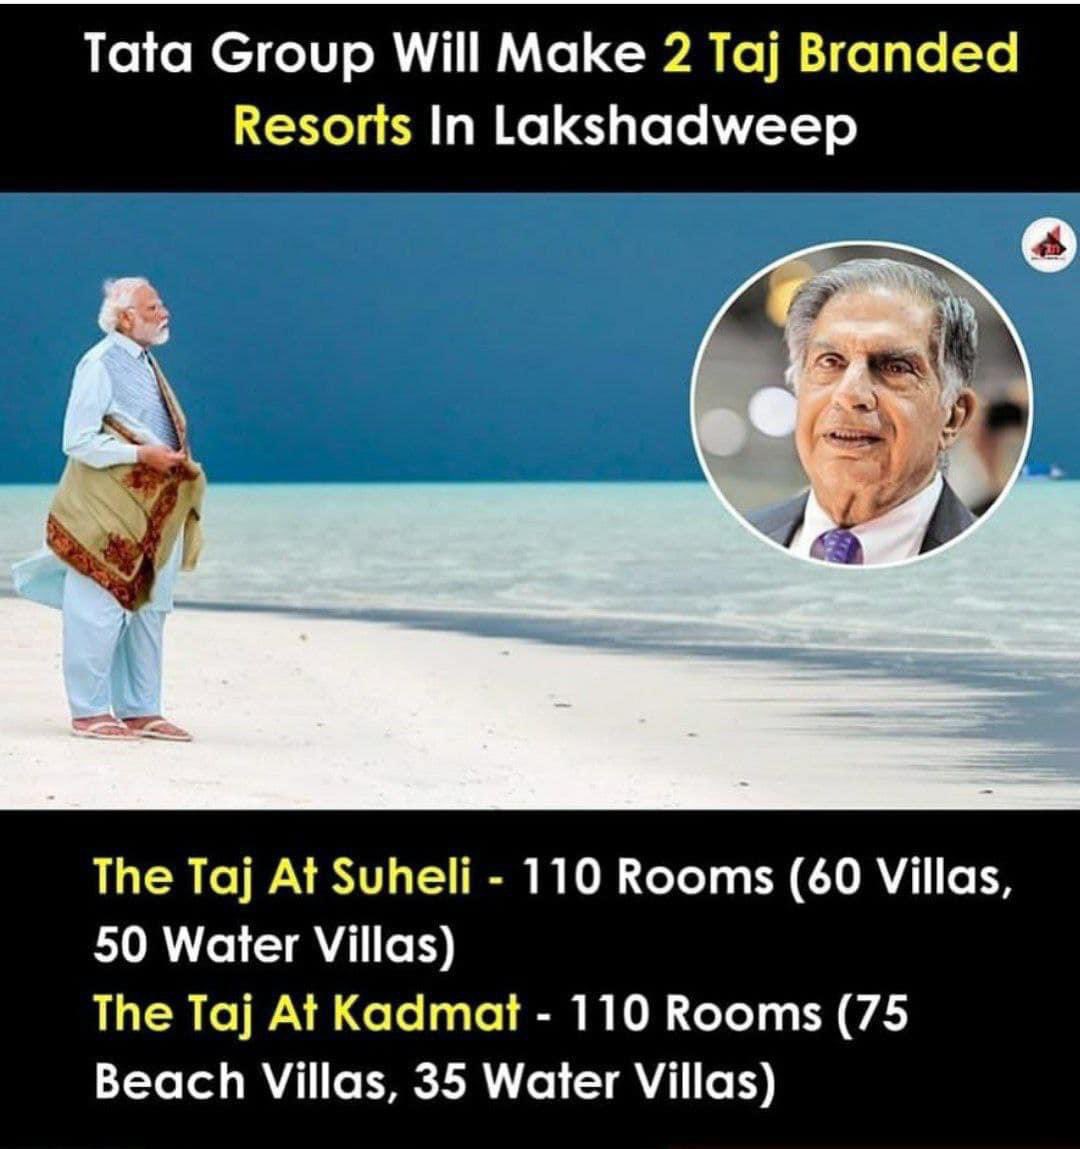 TATA Group to Make 2 Taj Branded Resorts in Lakshadweep.

#Lakshadweep 
#LakshadweepIsland 
#ExploreIndianIsland 
#ExploreIncredibleIndia 
#Boycott_Maldives #Maldives